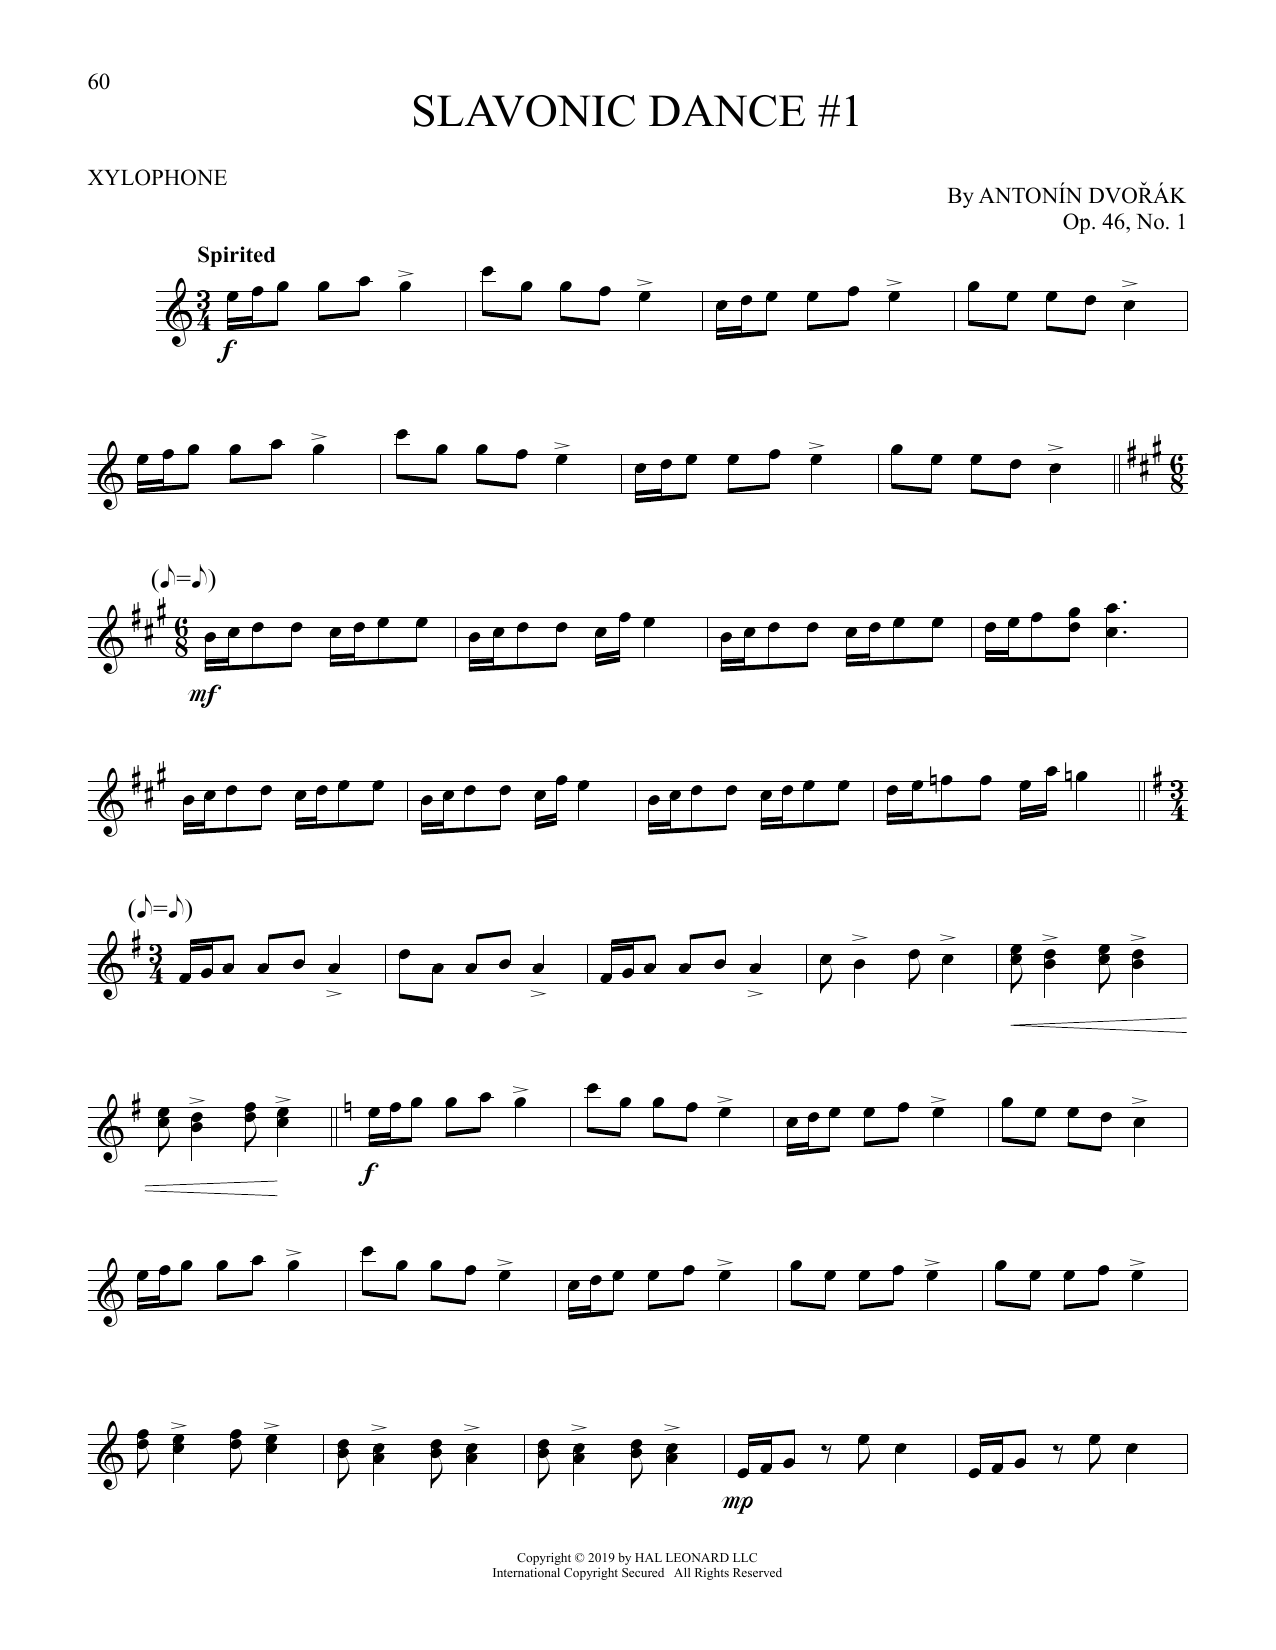 Antonin Dvorak Slavonic Dance No. 1 Sheet Music Notes & Chords for Xylophone Solo - Download or Print PDF